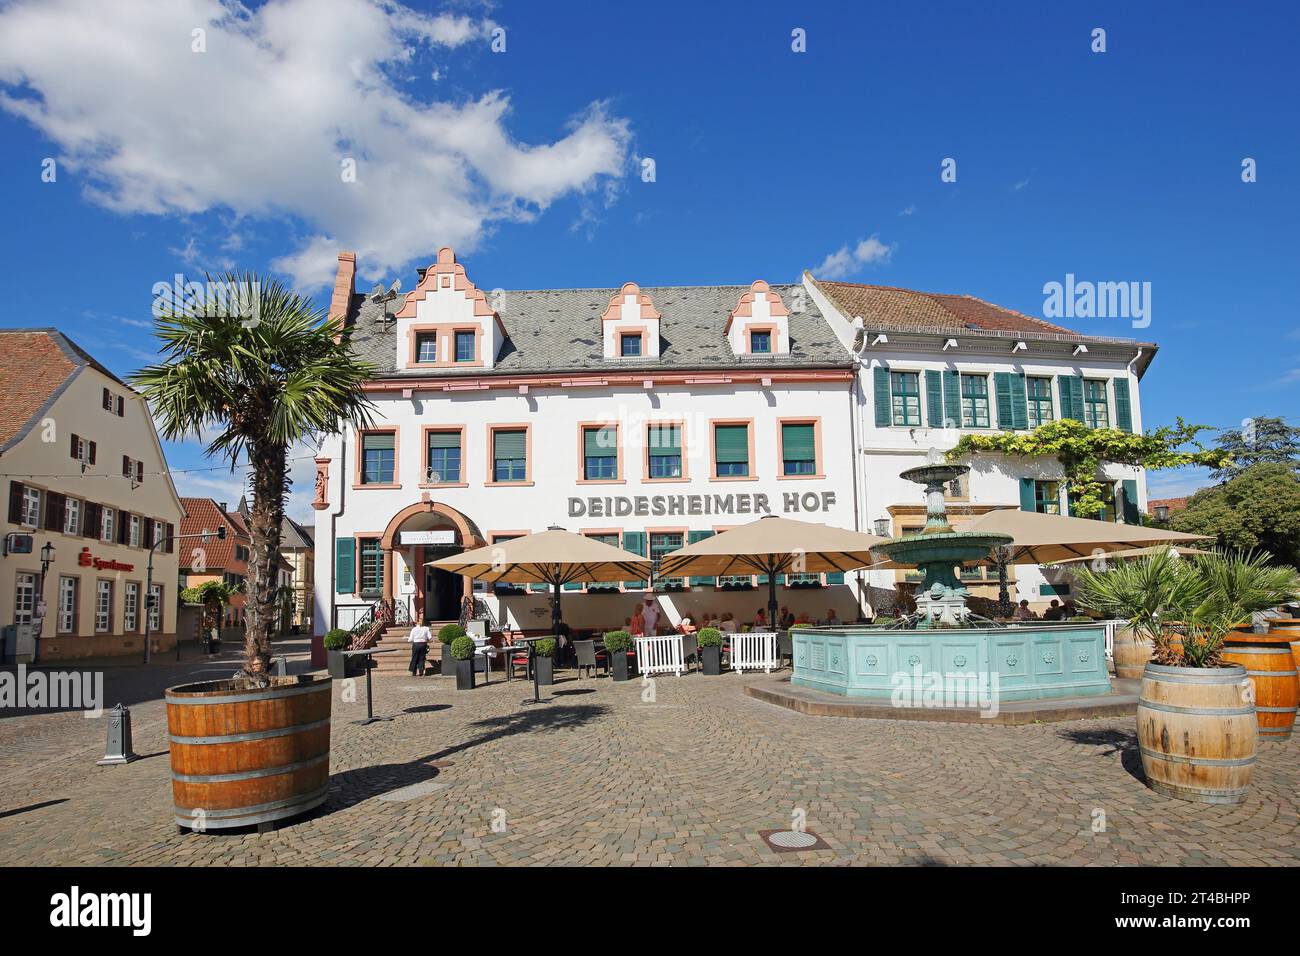 Restaurant Deidesheimer Hof, fountain, building, street pub, palm tree, people, Deidesheim, Rhineland-Palatinate, Germany Stock Photo